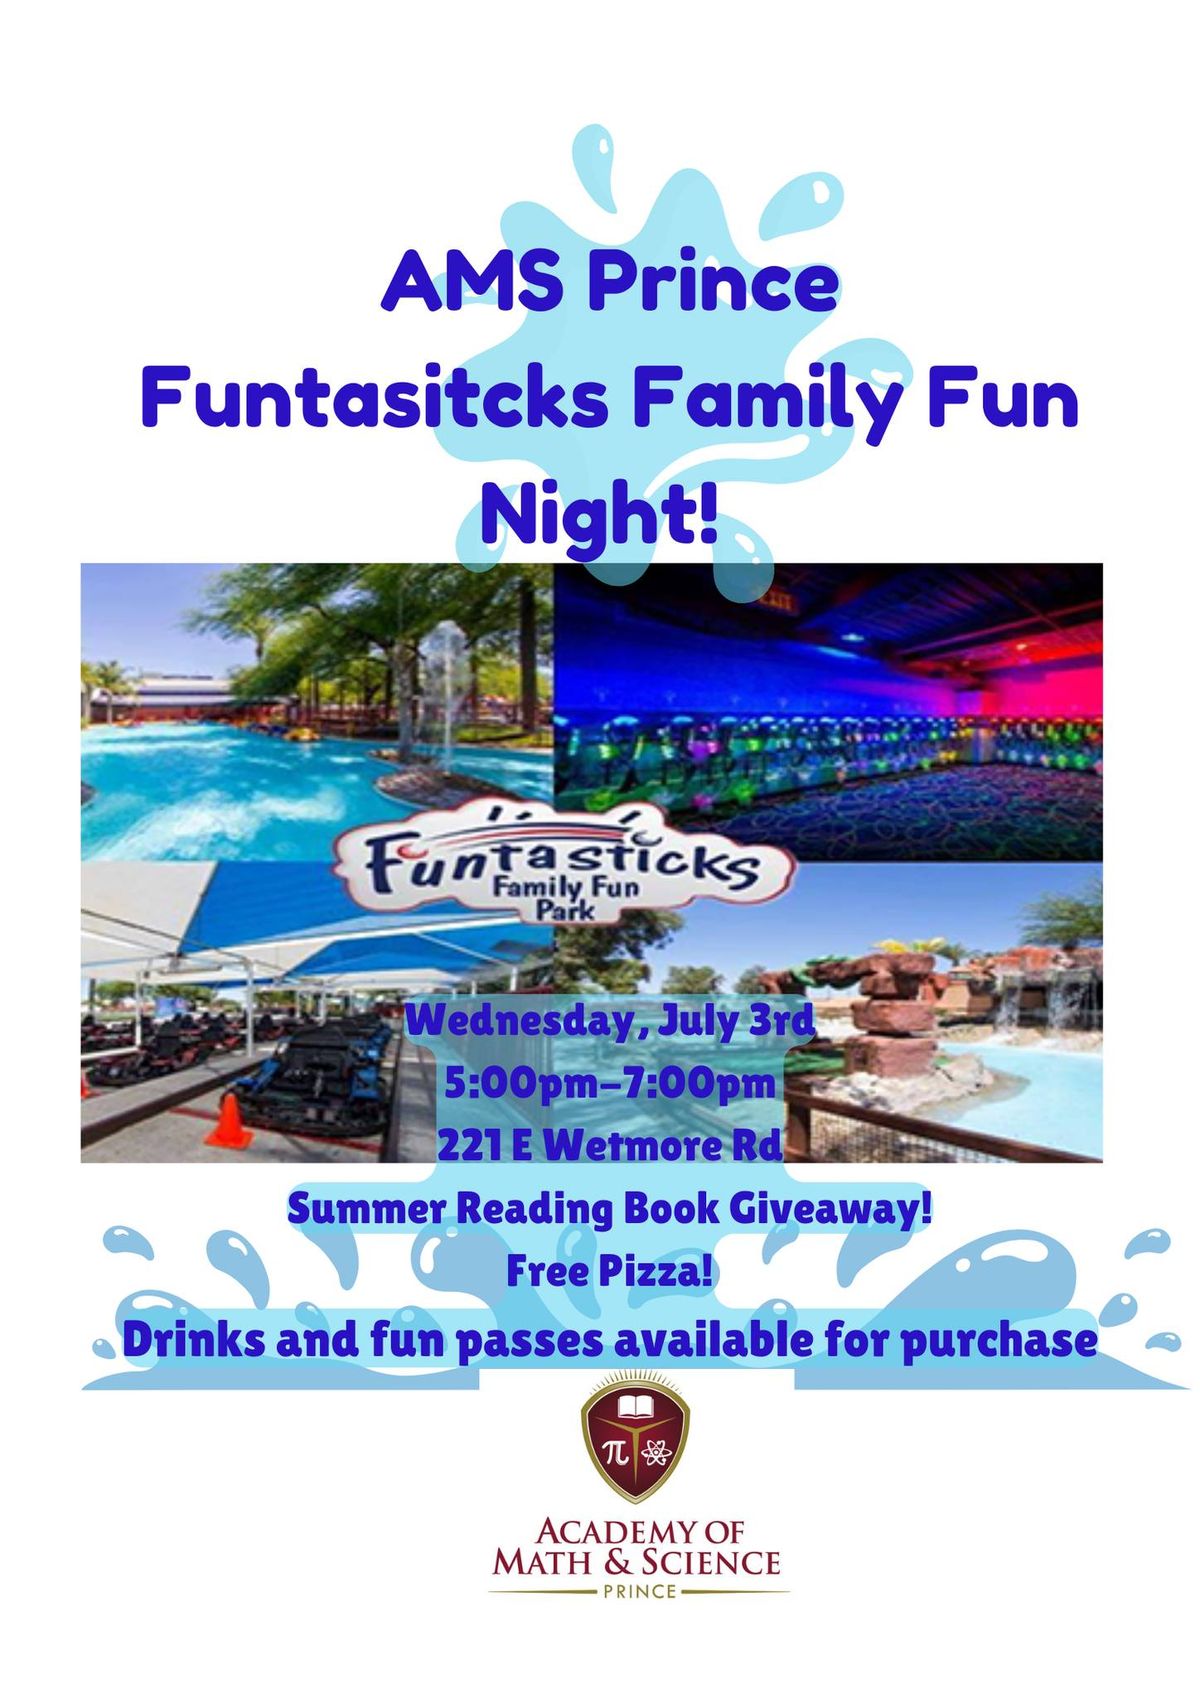 AMS Prince Funtasticks Family fun Night